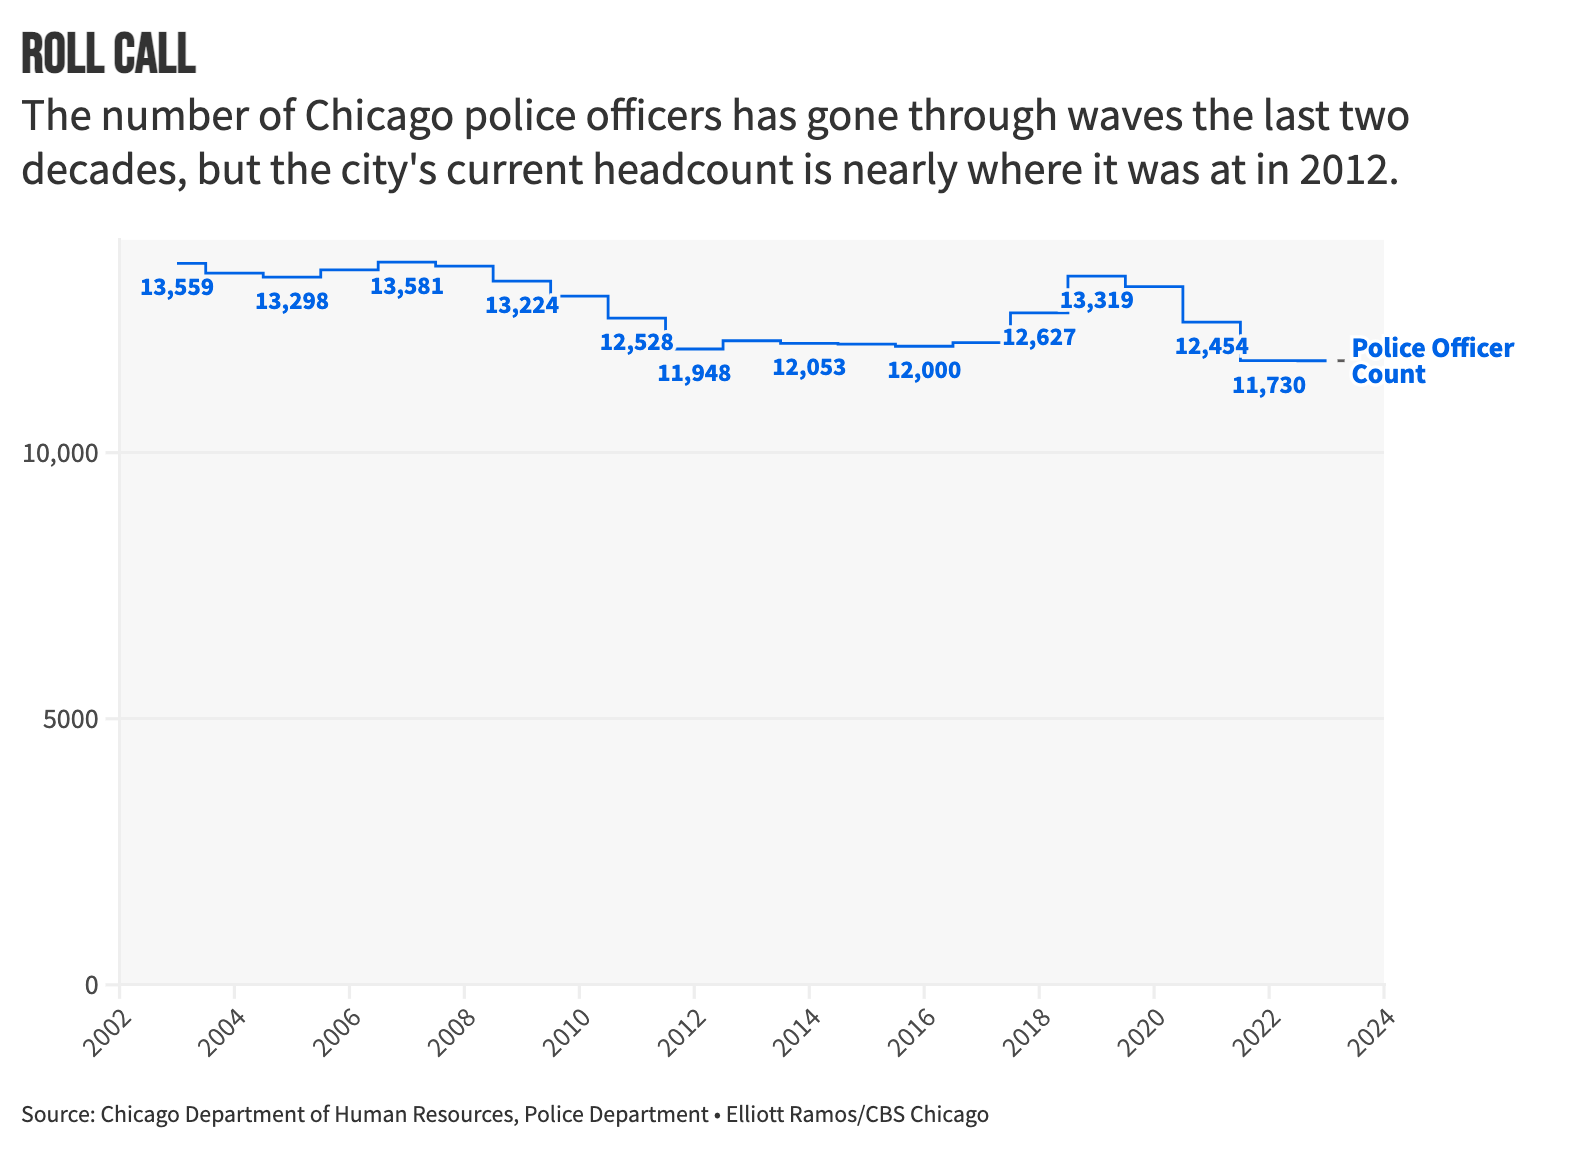 chicago-cop-departure-2002-20232x.png 